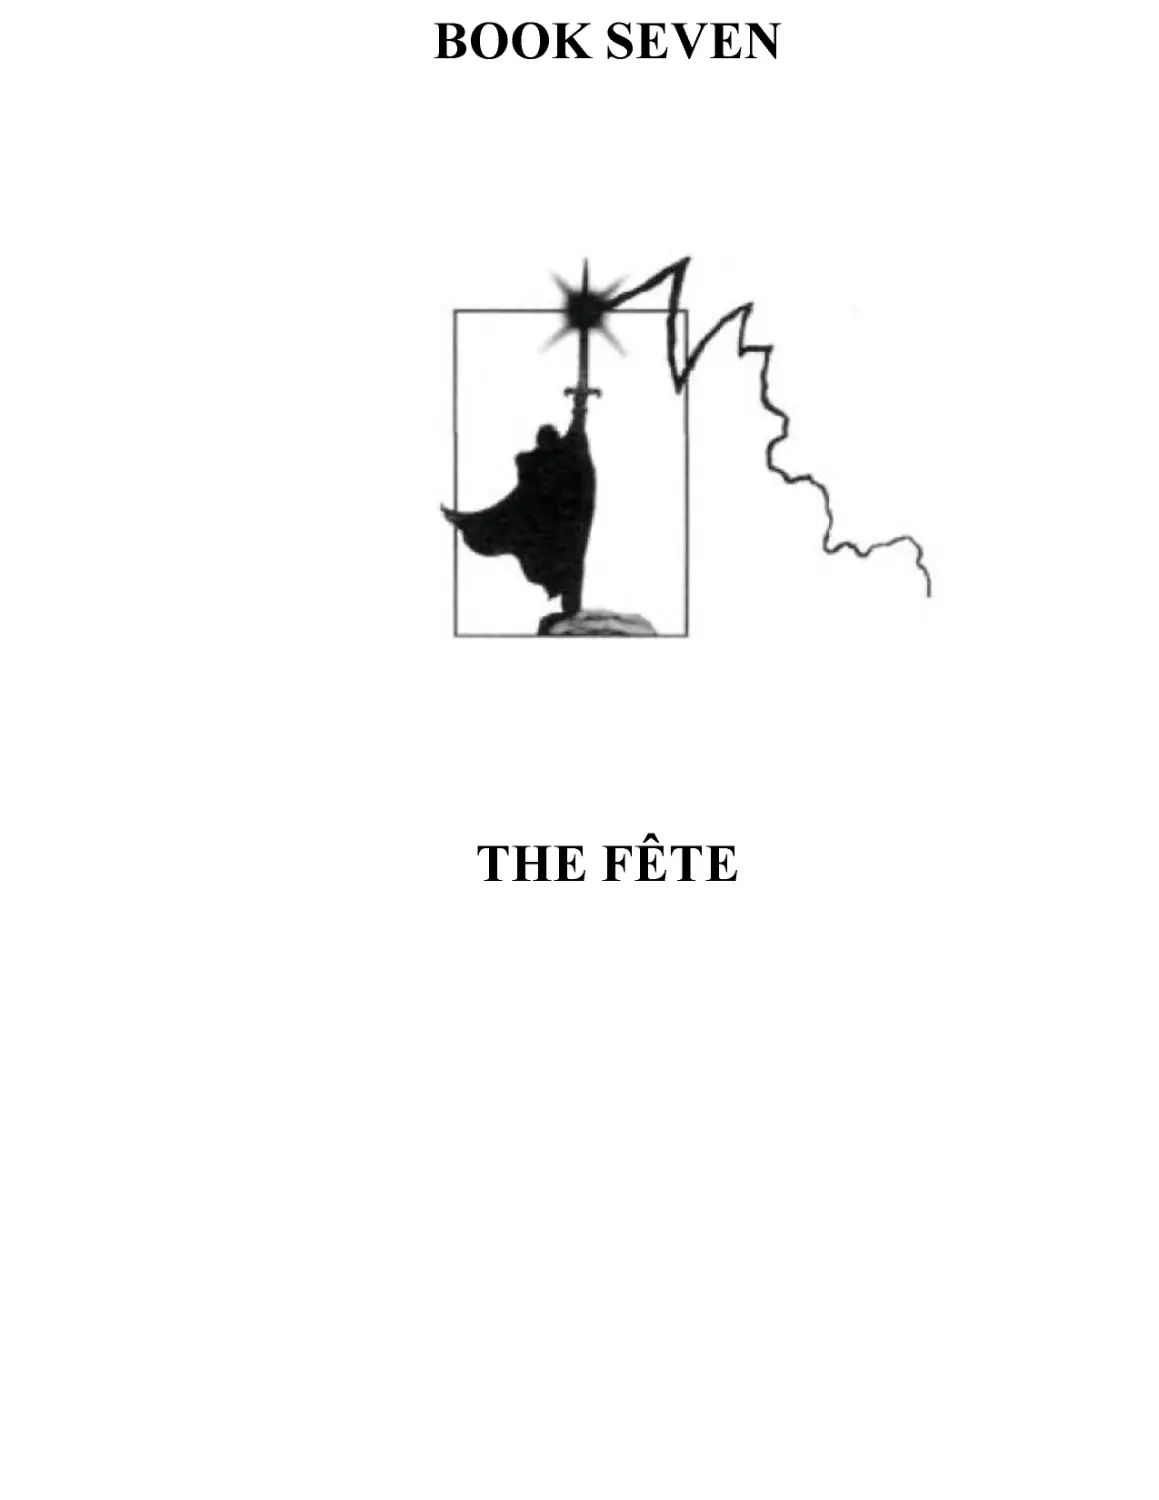 BOOK SEVEN: THE FÊTE